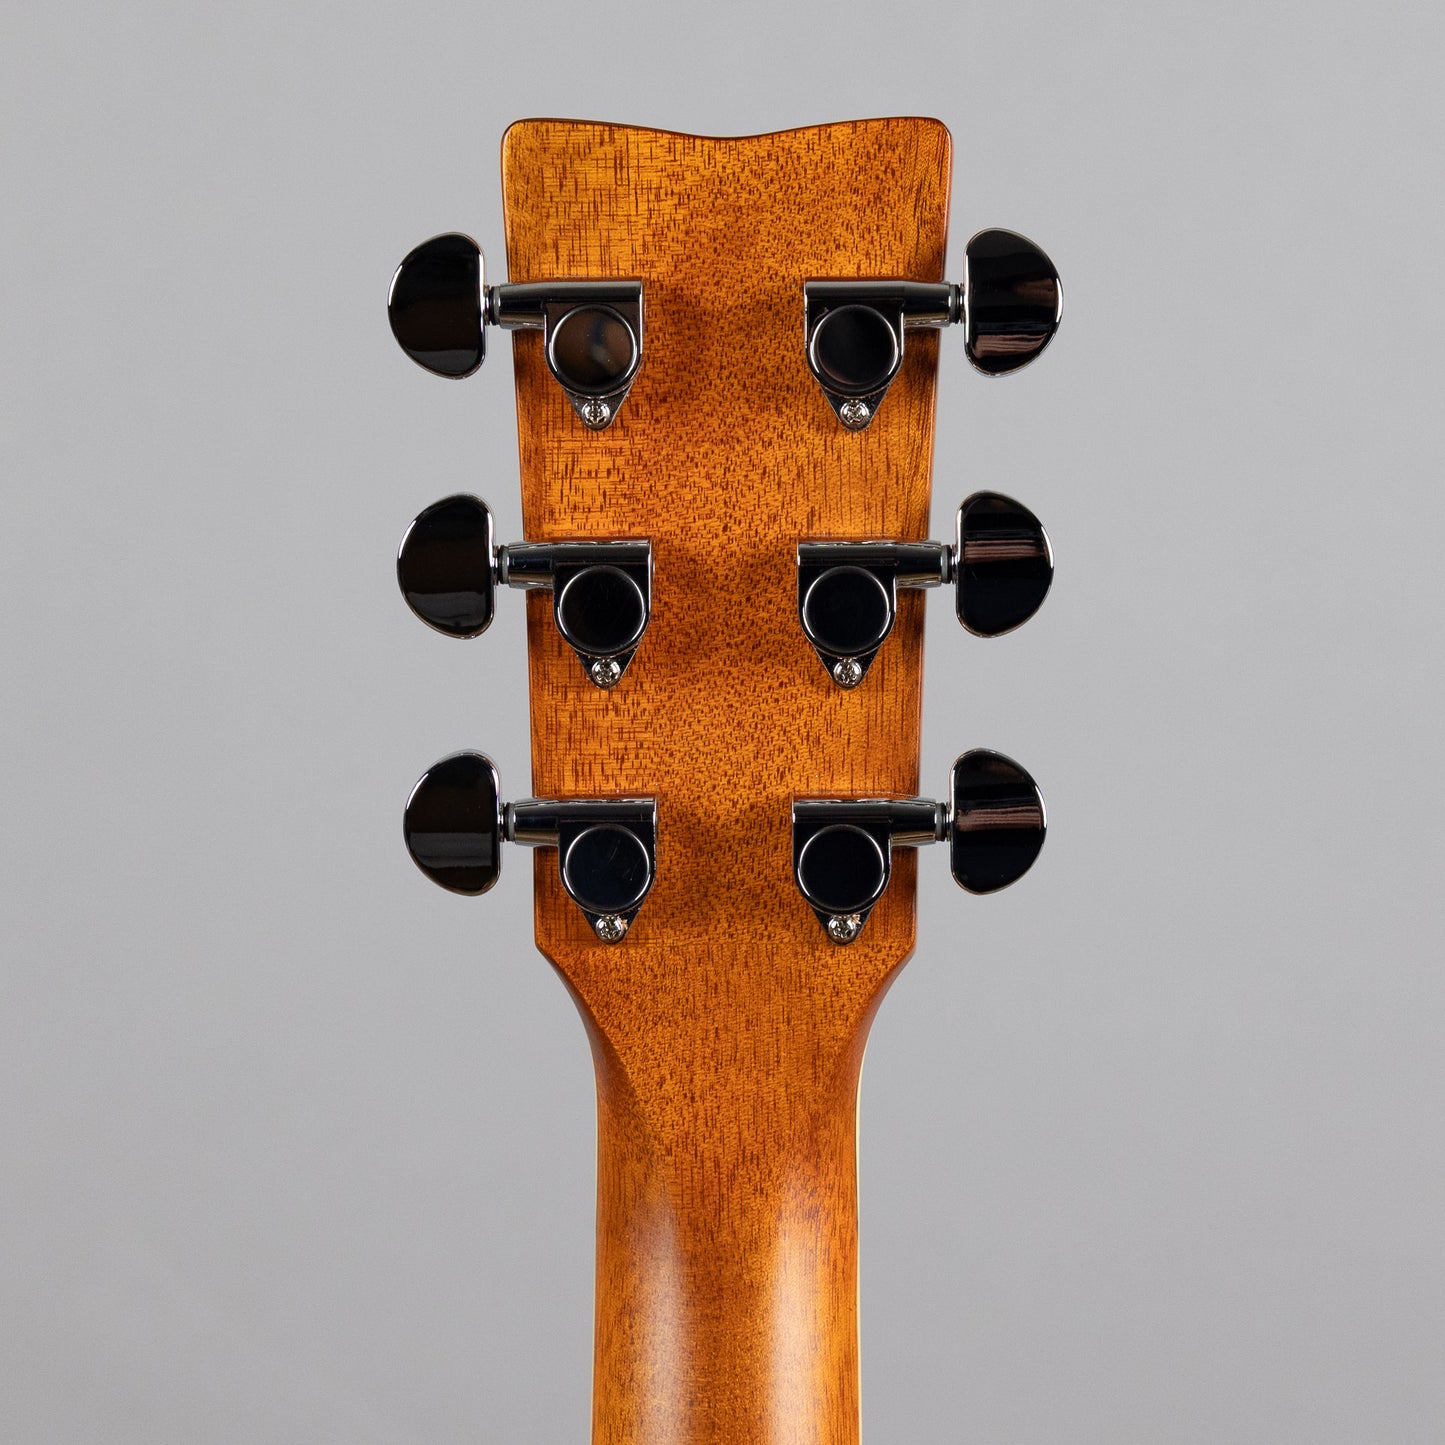 Yamaha FG830 Acoustic Guitar in Autumn Burst